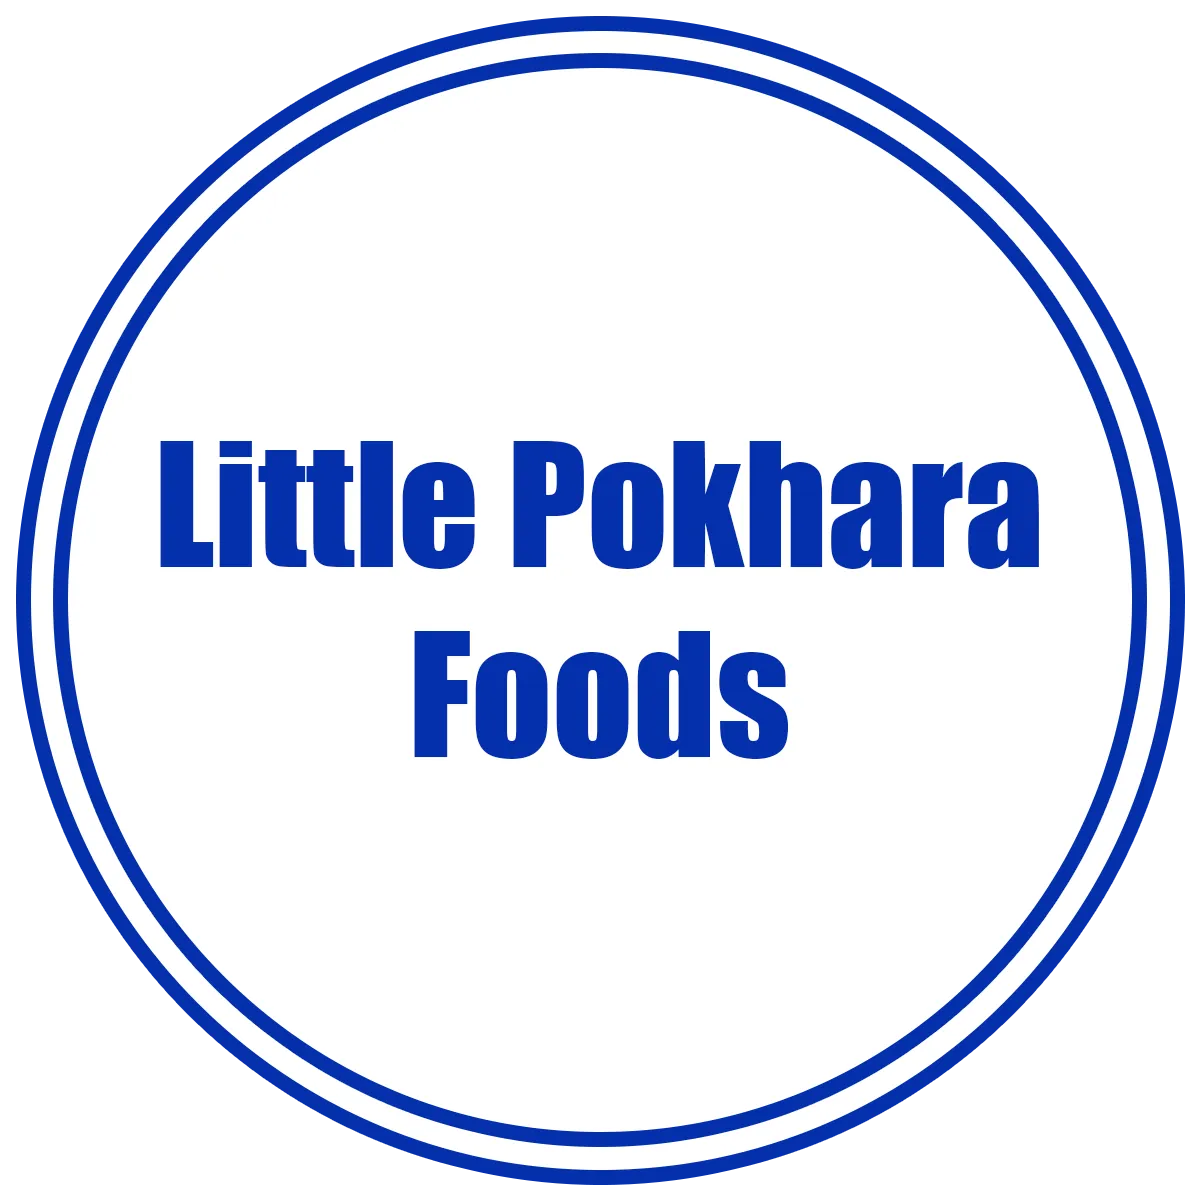 Little Pokhara Foods